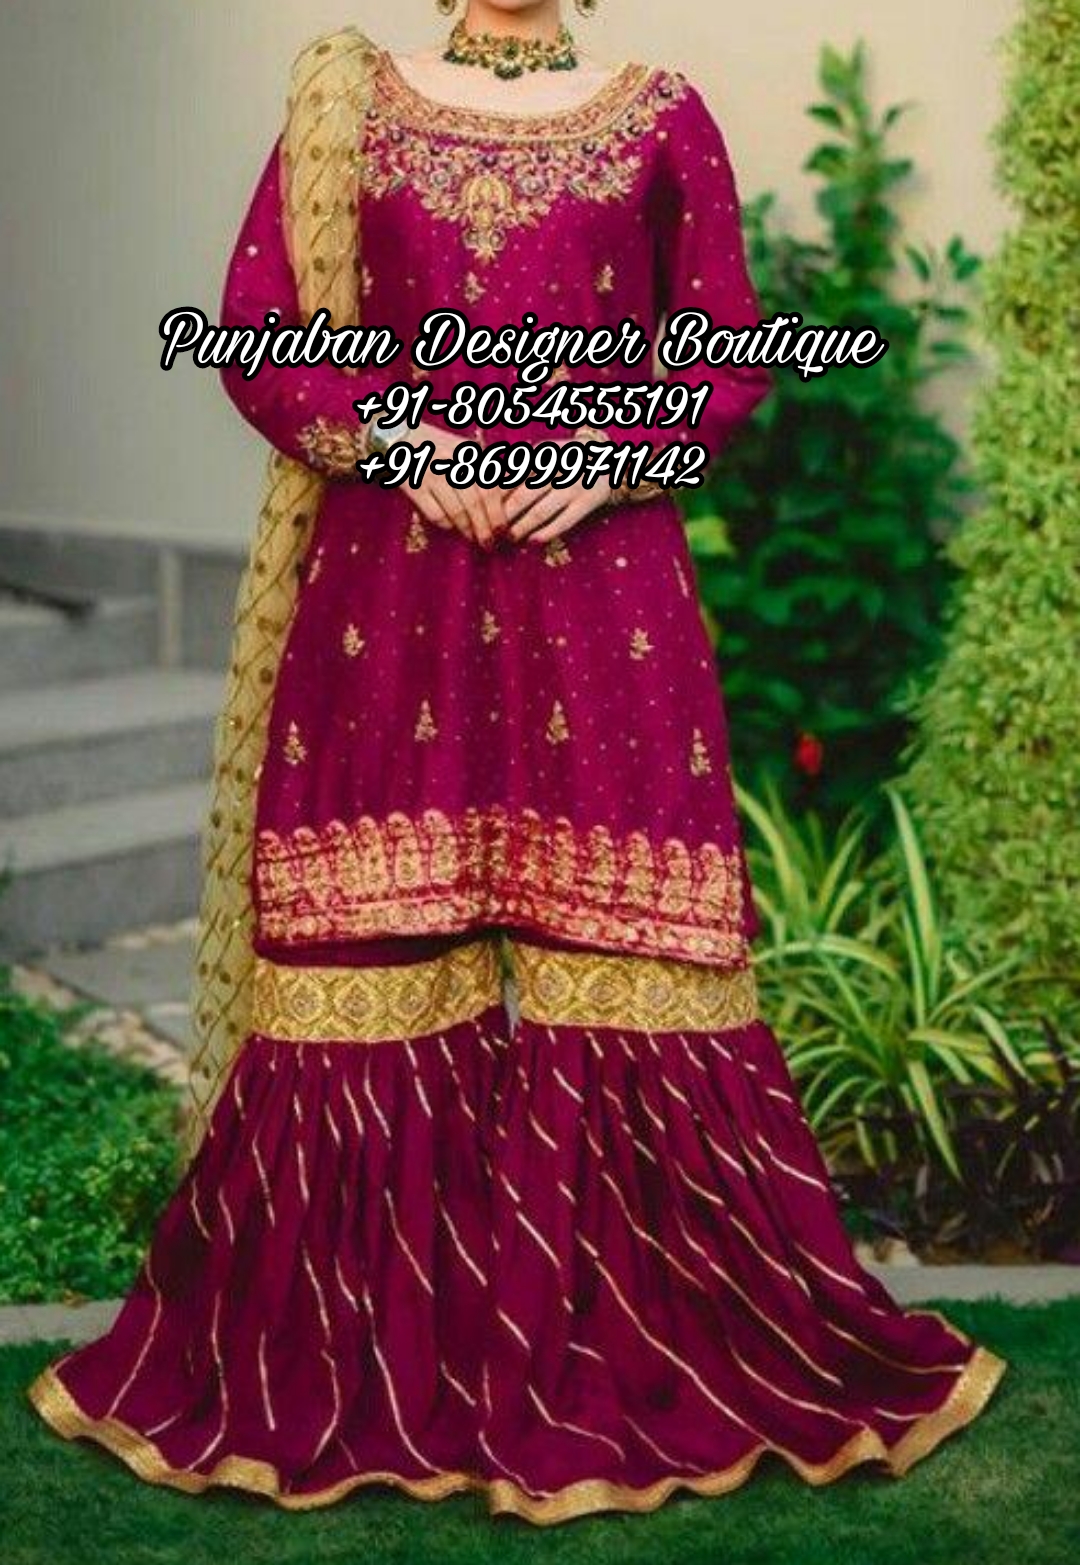 Designer Punjabi Suits | Punjaban Designer Boutique